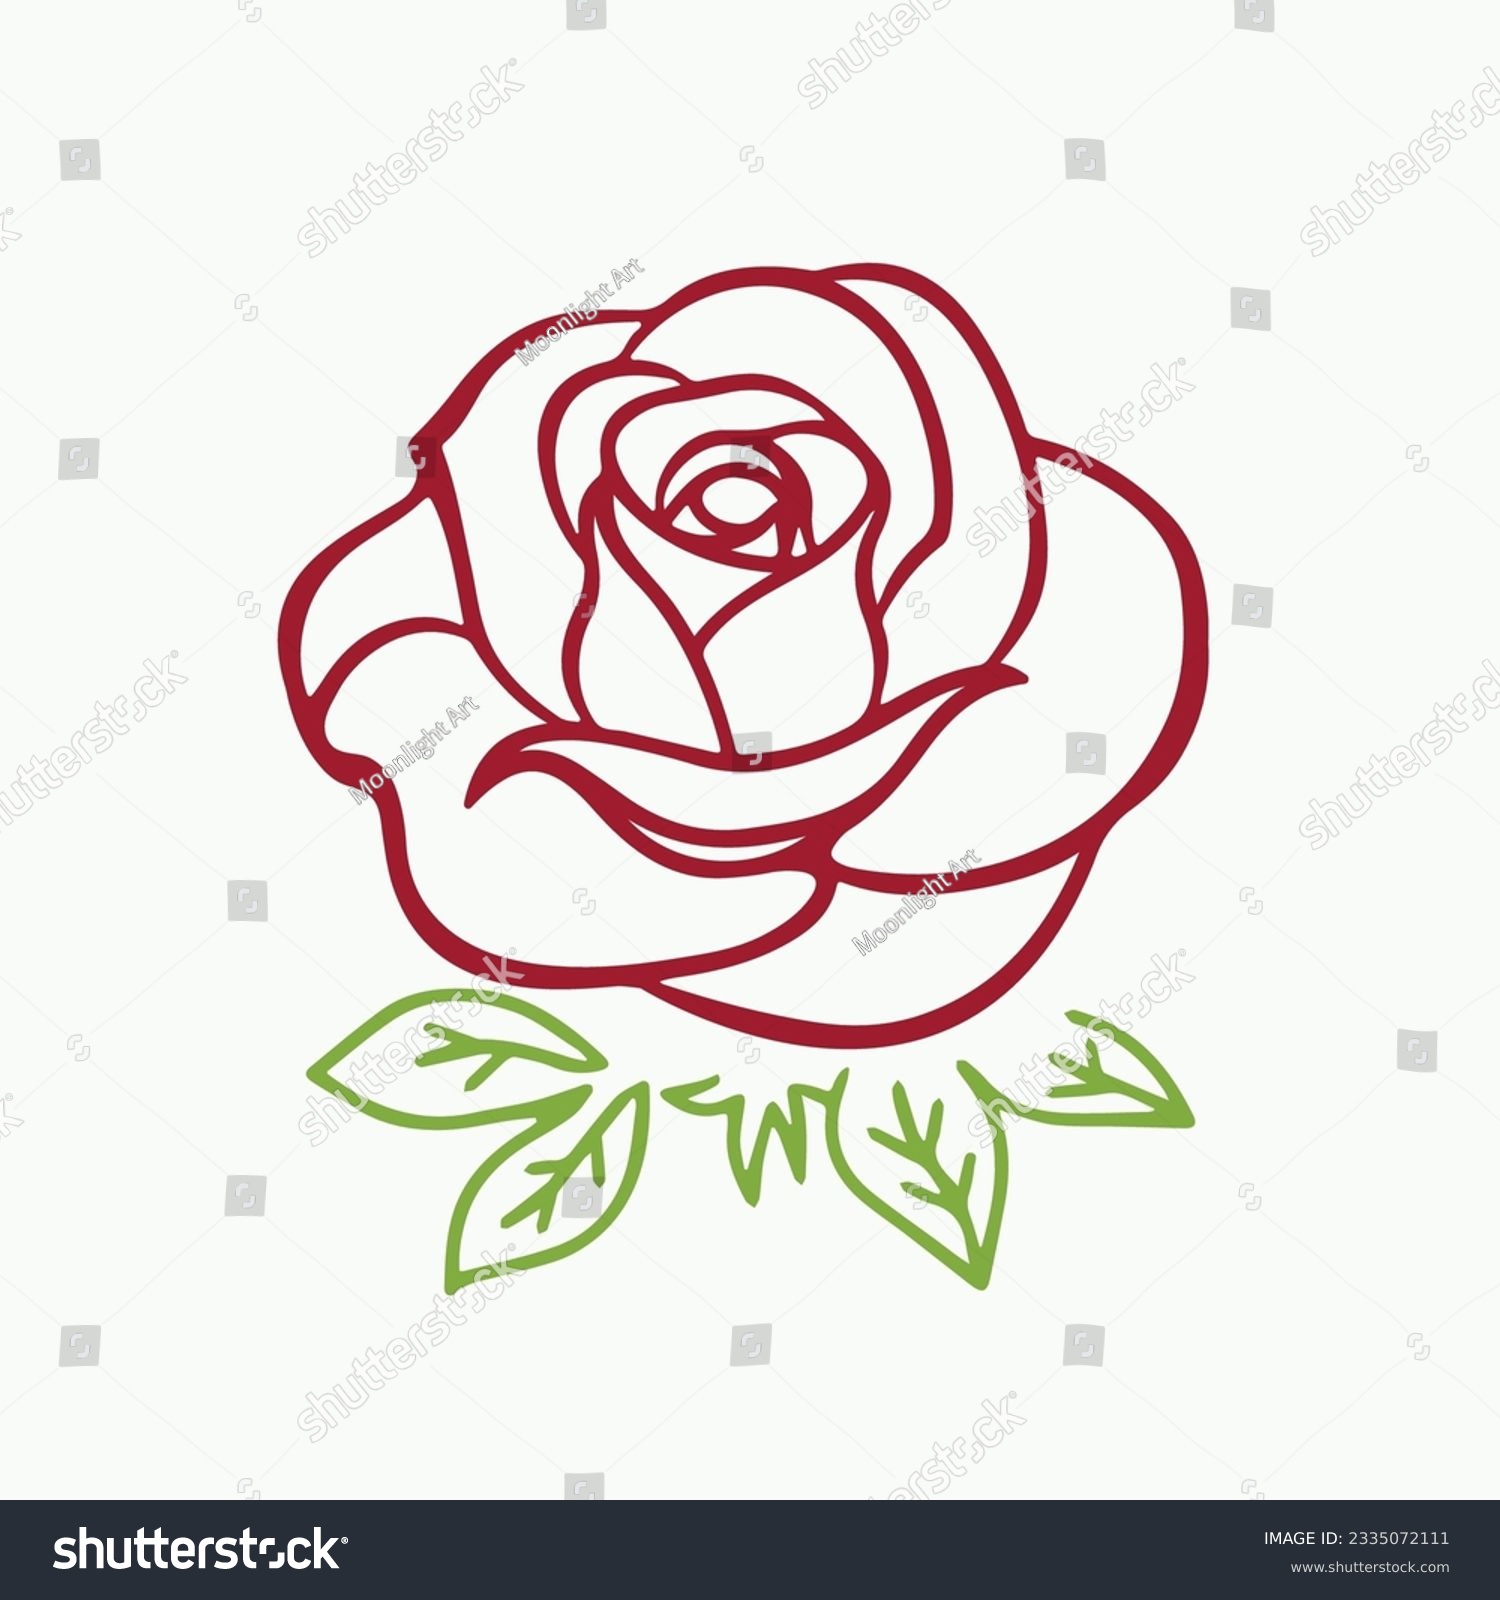 SVG of Rose Line Art Svg, Rose, Line Art, Floral Decoration Svg, Flowers, Rose Floral, Nature, Cricut Cut Files, Silhouette Svg, Svg Files for Cricut svg